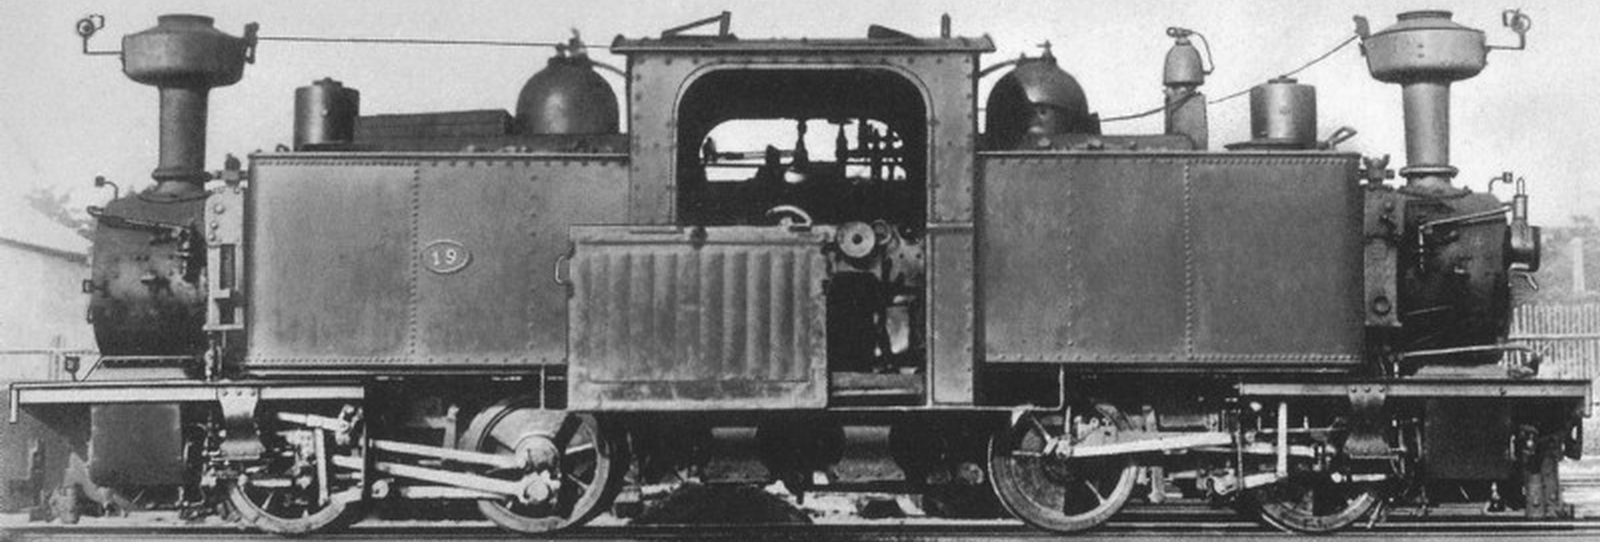 No. 19, the second locomotive, around 1900